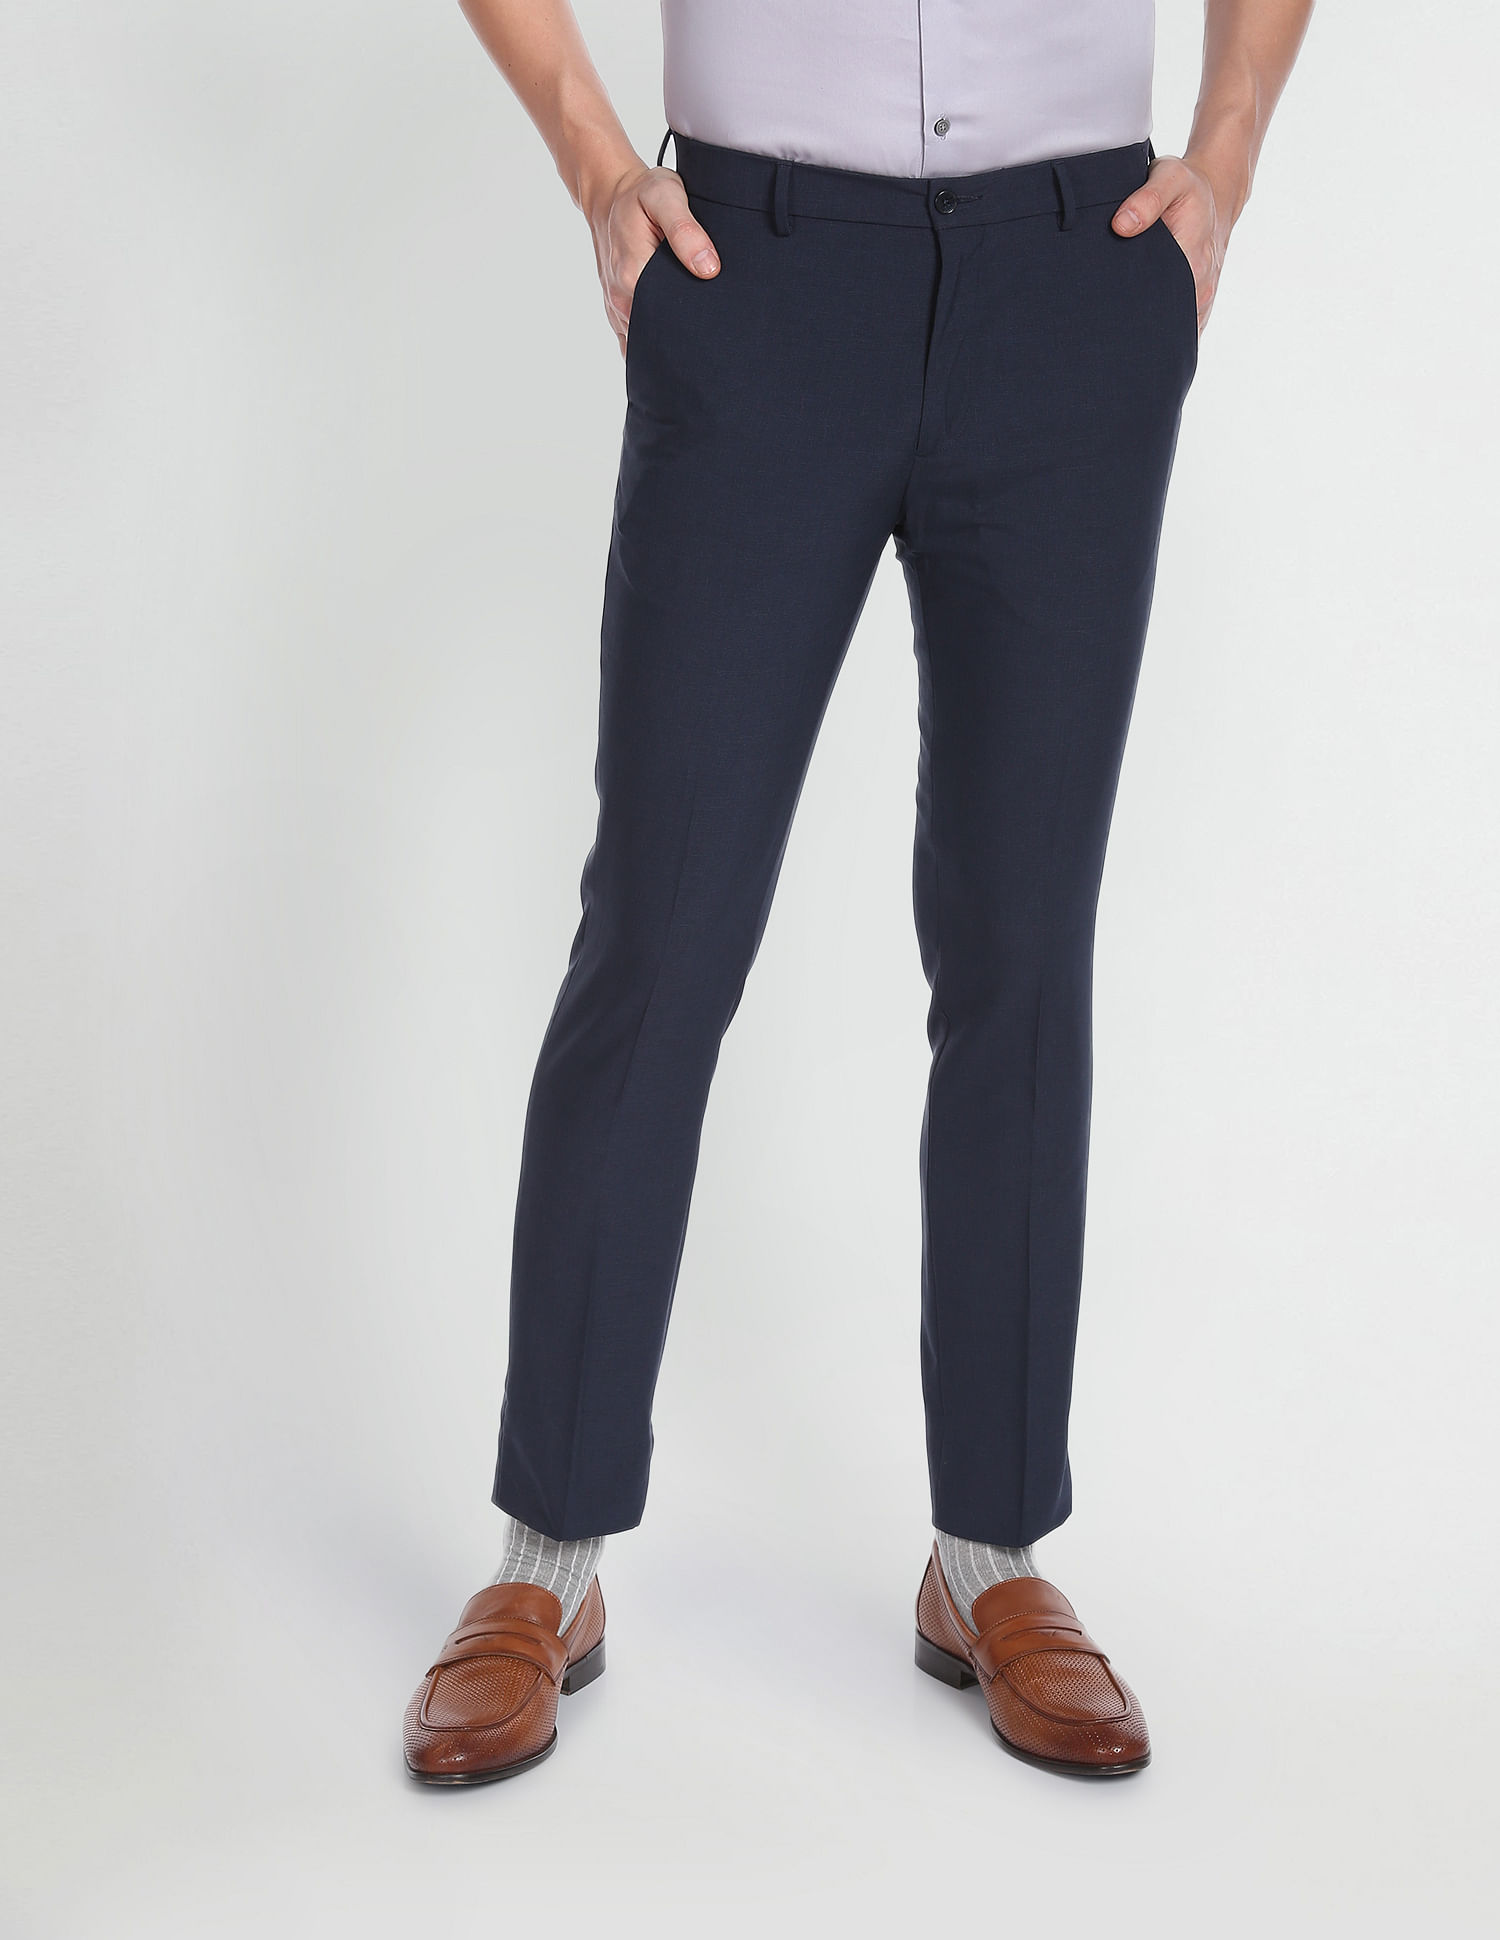 Buy Dark Grey Plaid Formal Pants For Men Online In India